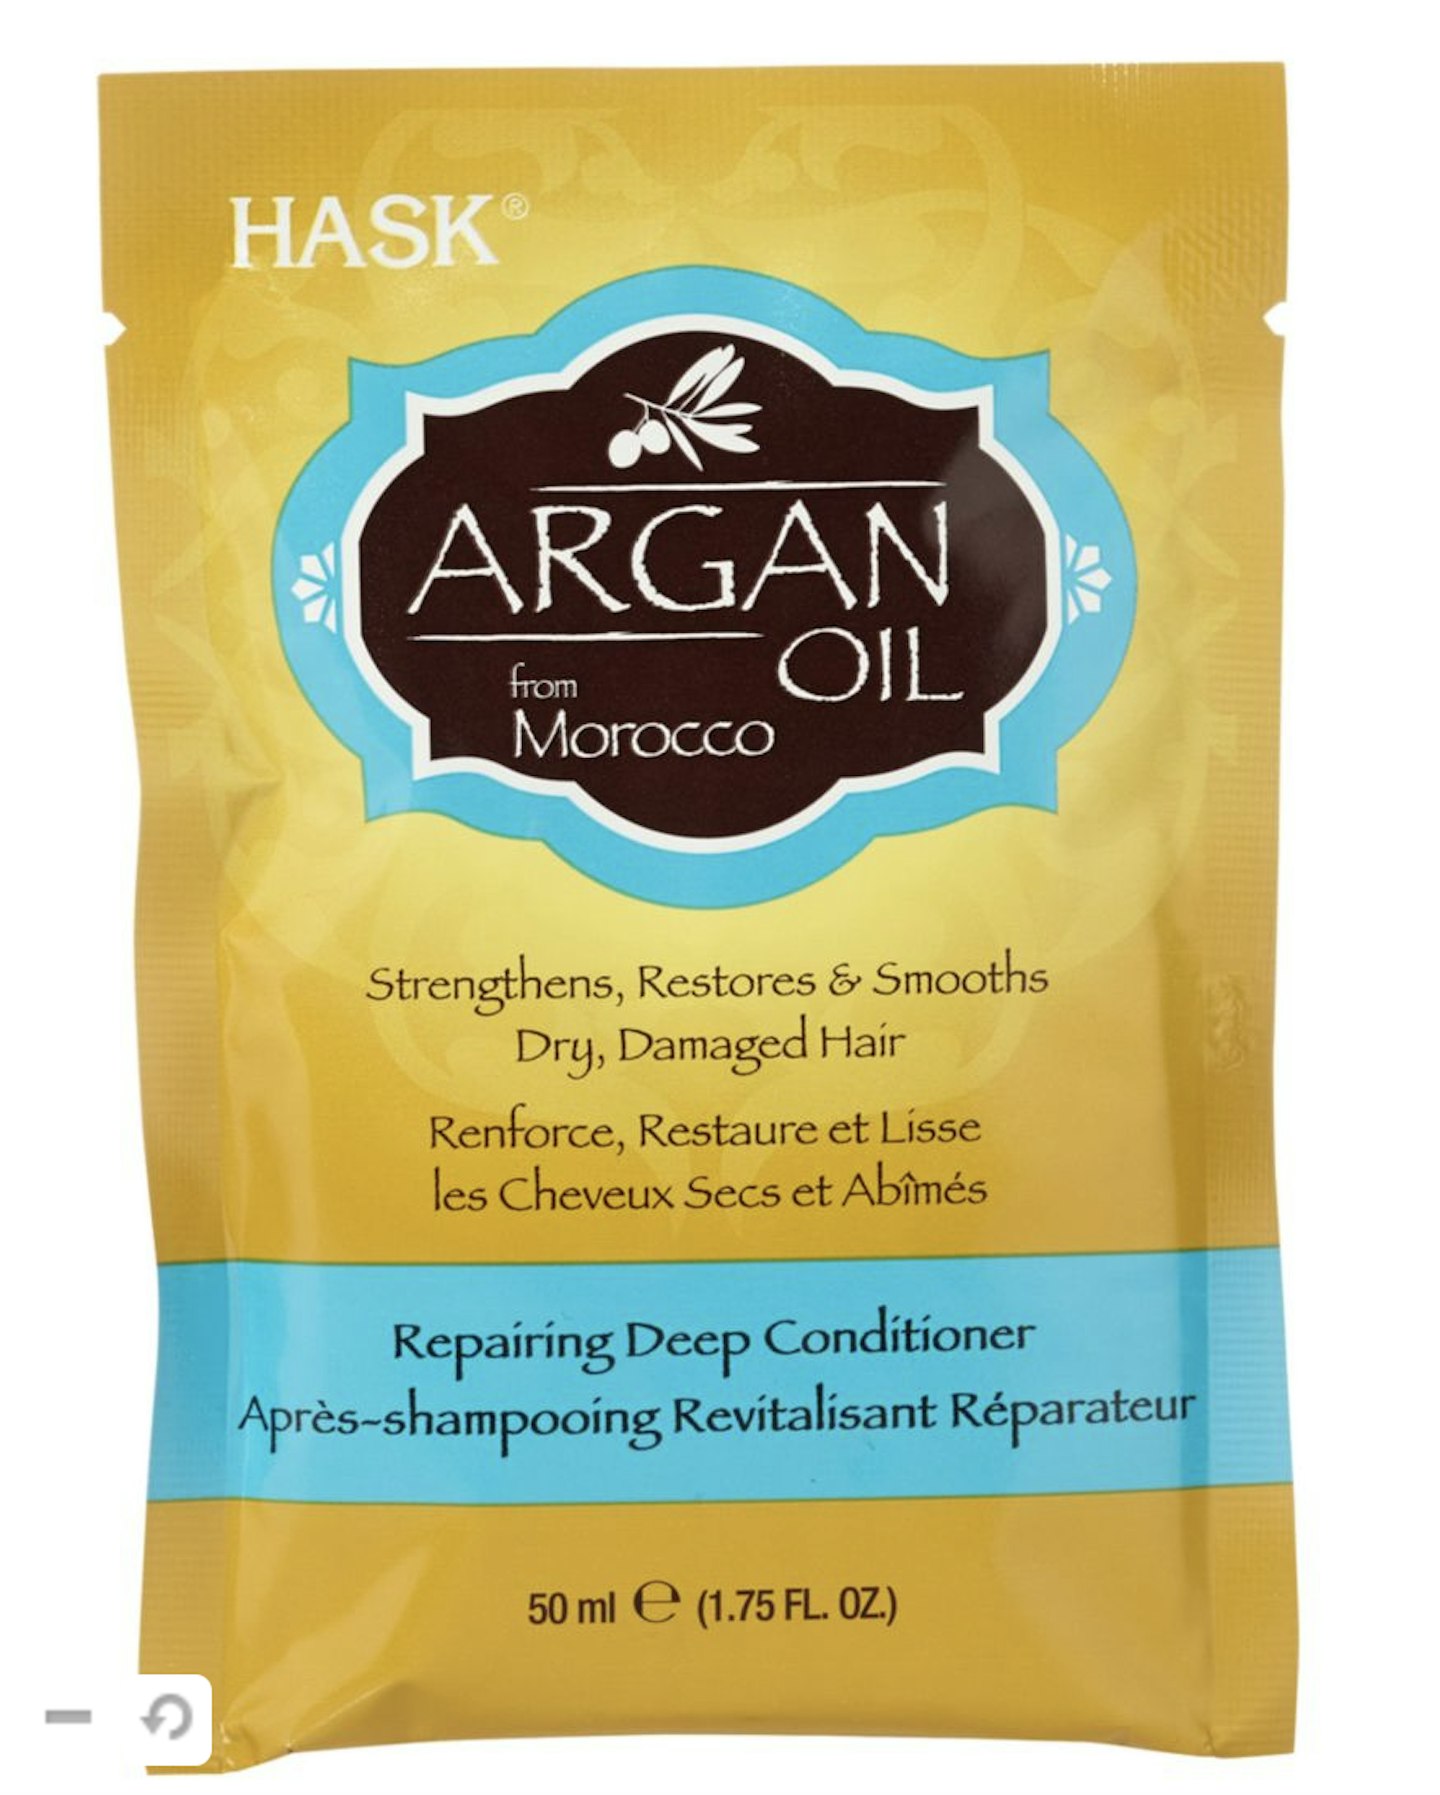 Hask Argan oil from Morocco repairing deep conditioner sachet 50g